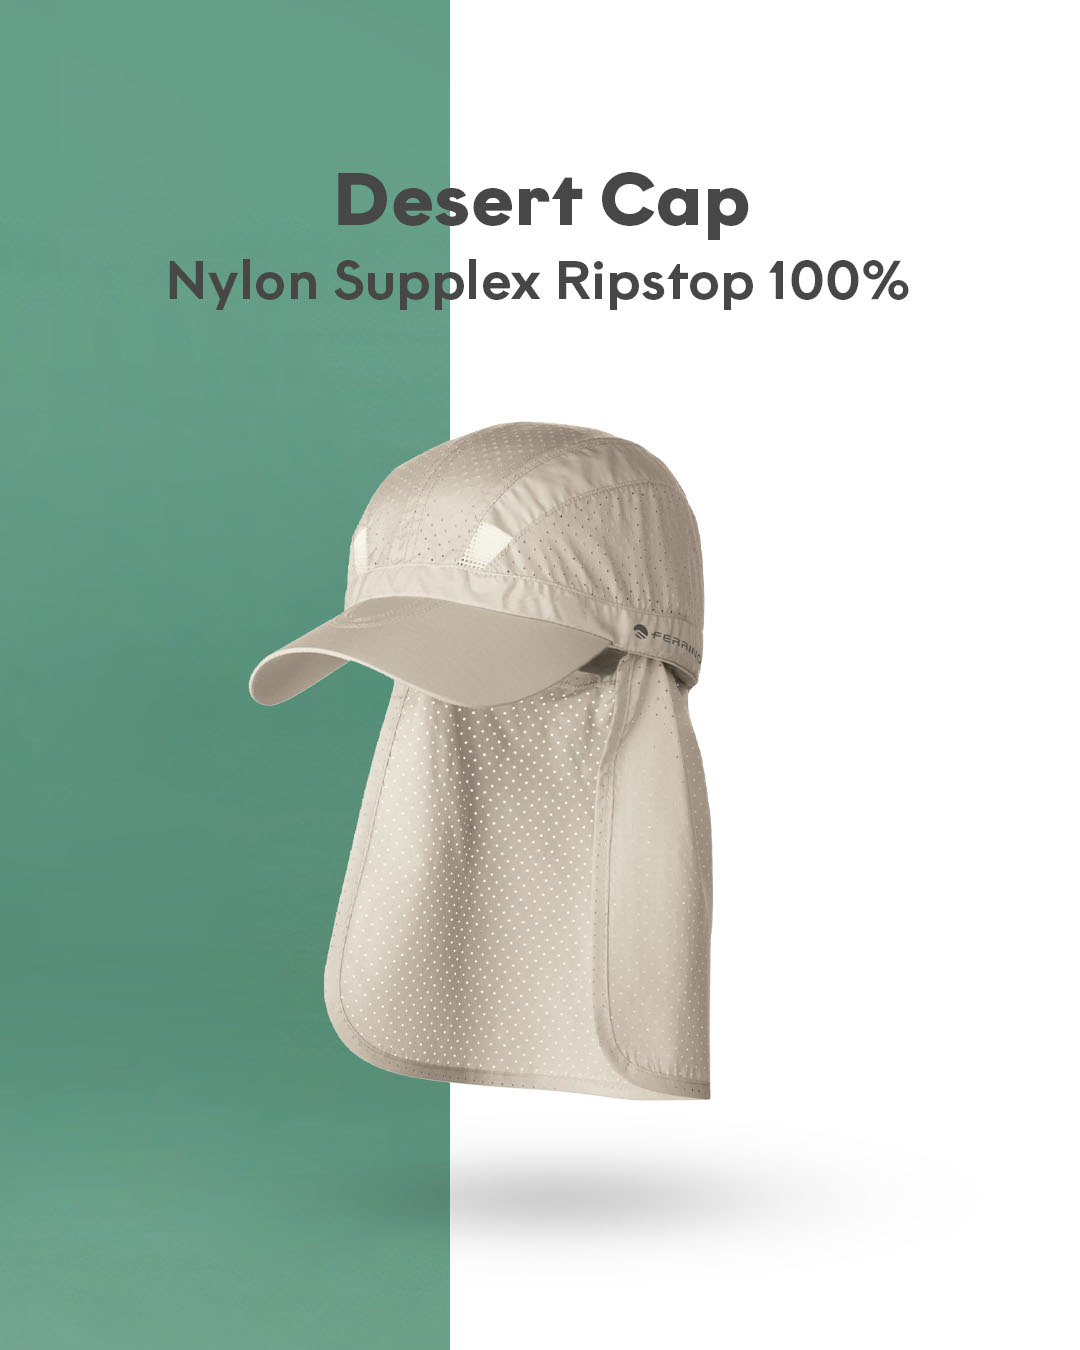 DESERT CAP